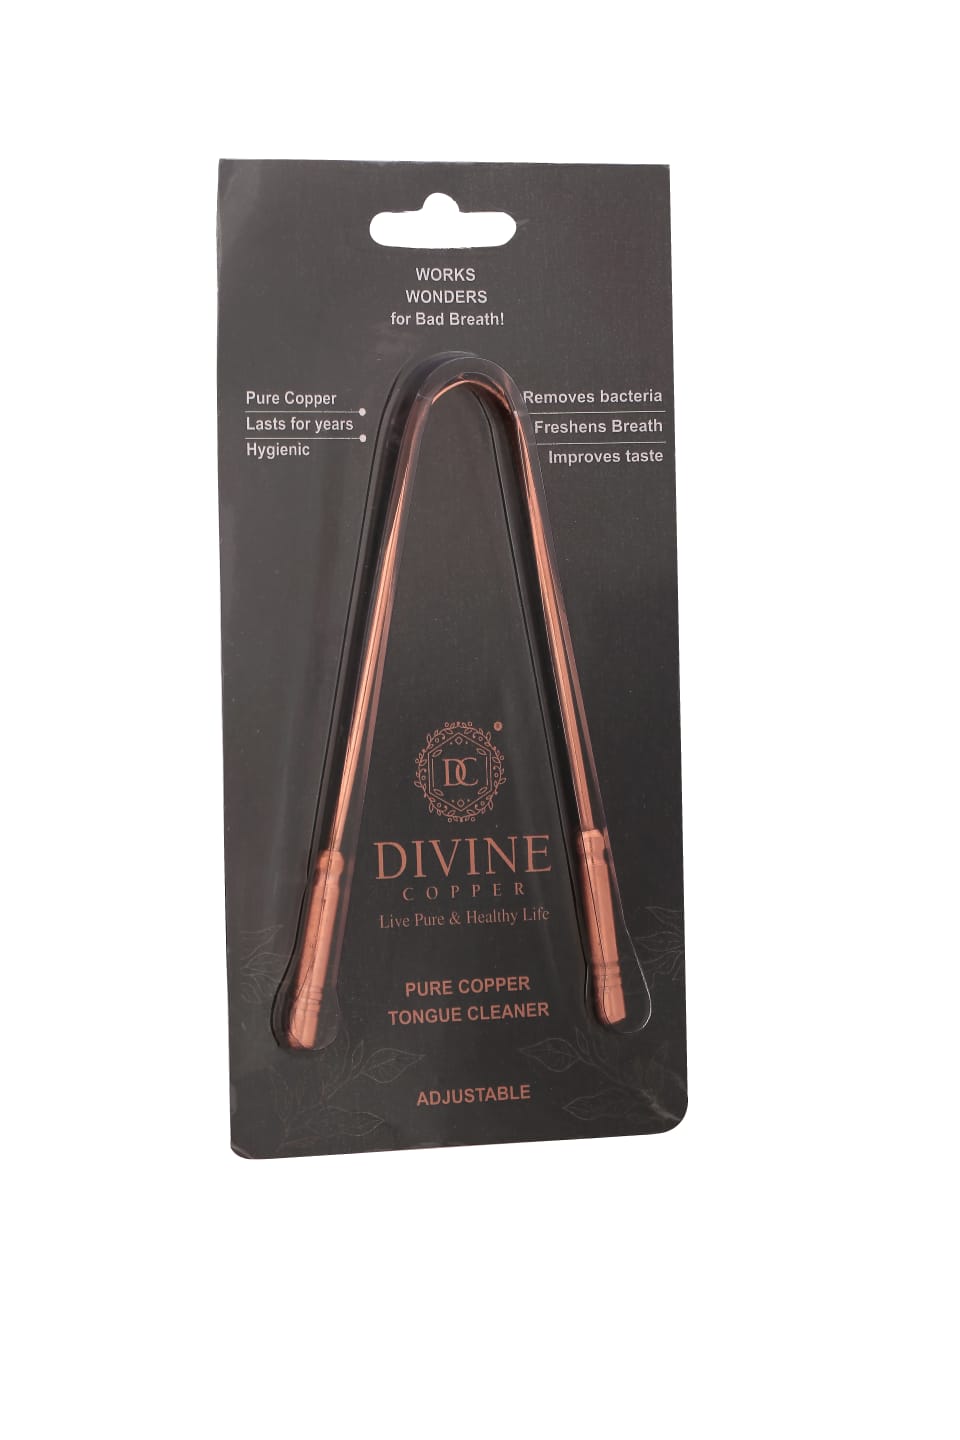 Divine copper Pure Copper tongue cleaner